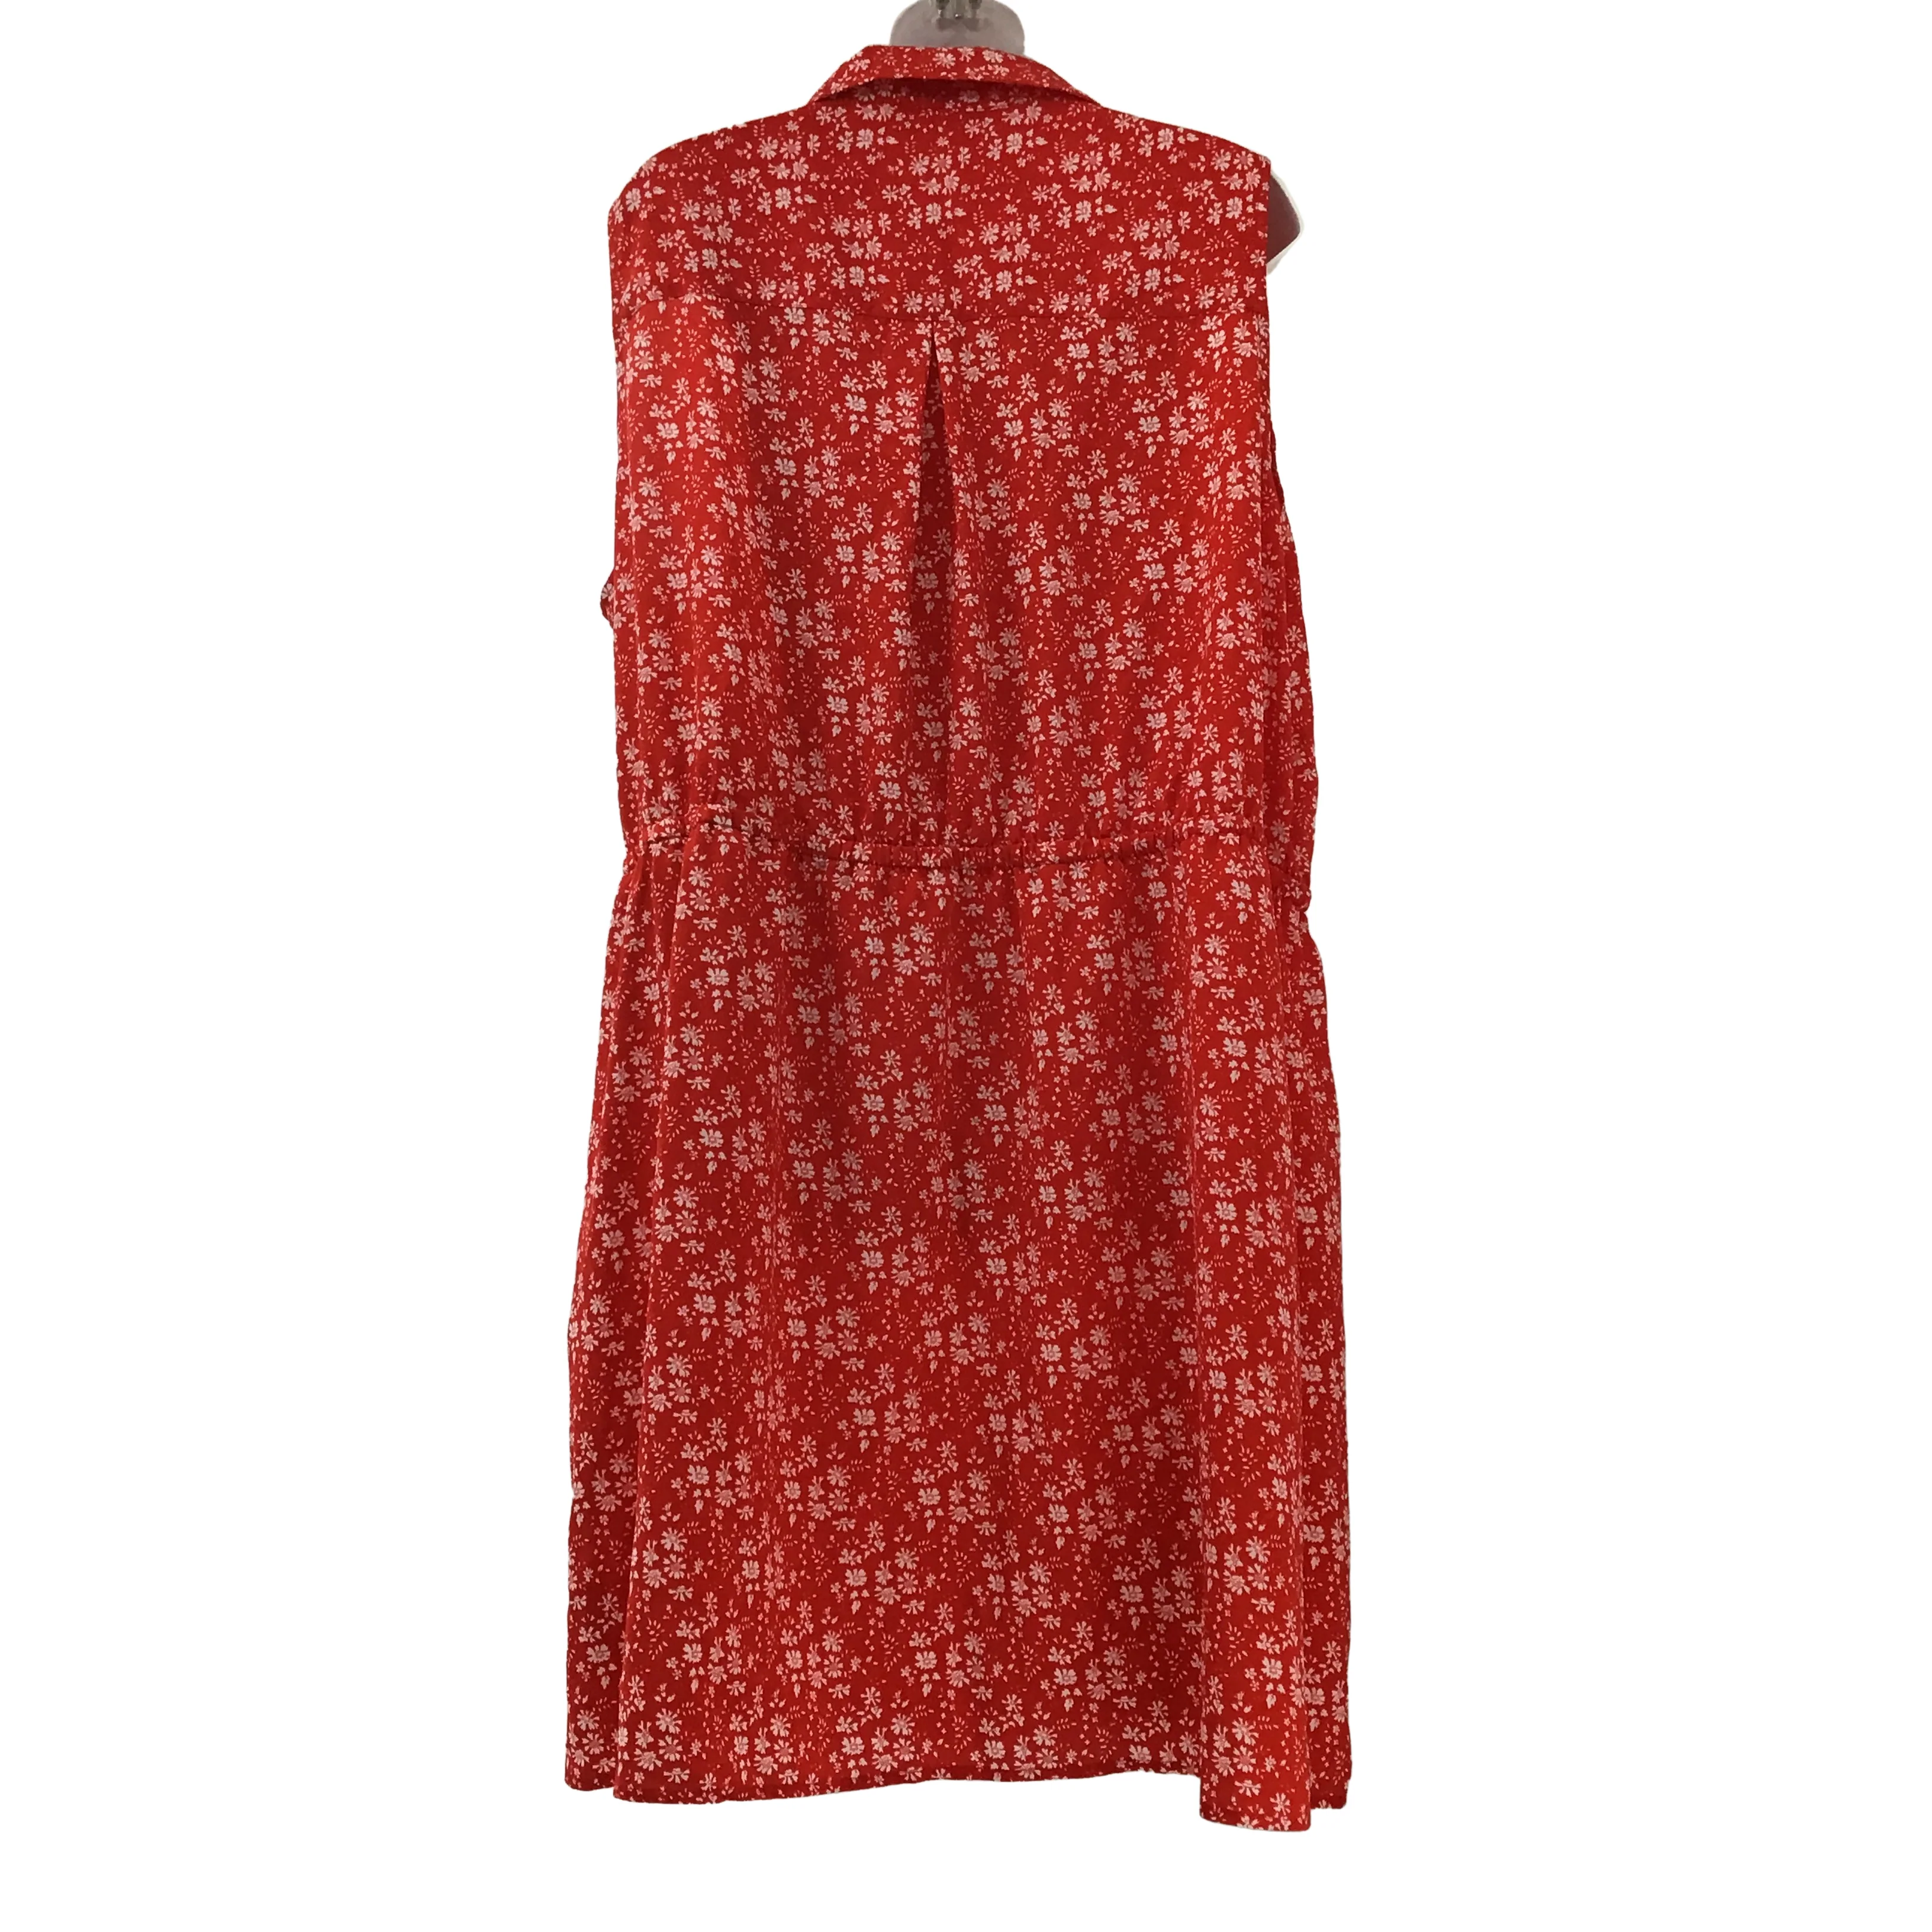 Mario Serrani : Women's Dress / Red /Floral / XL